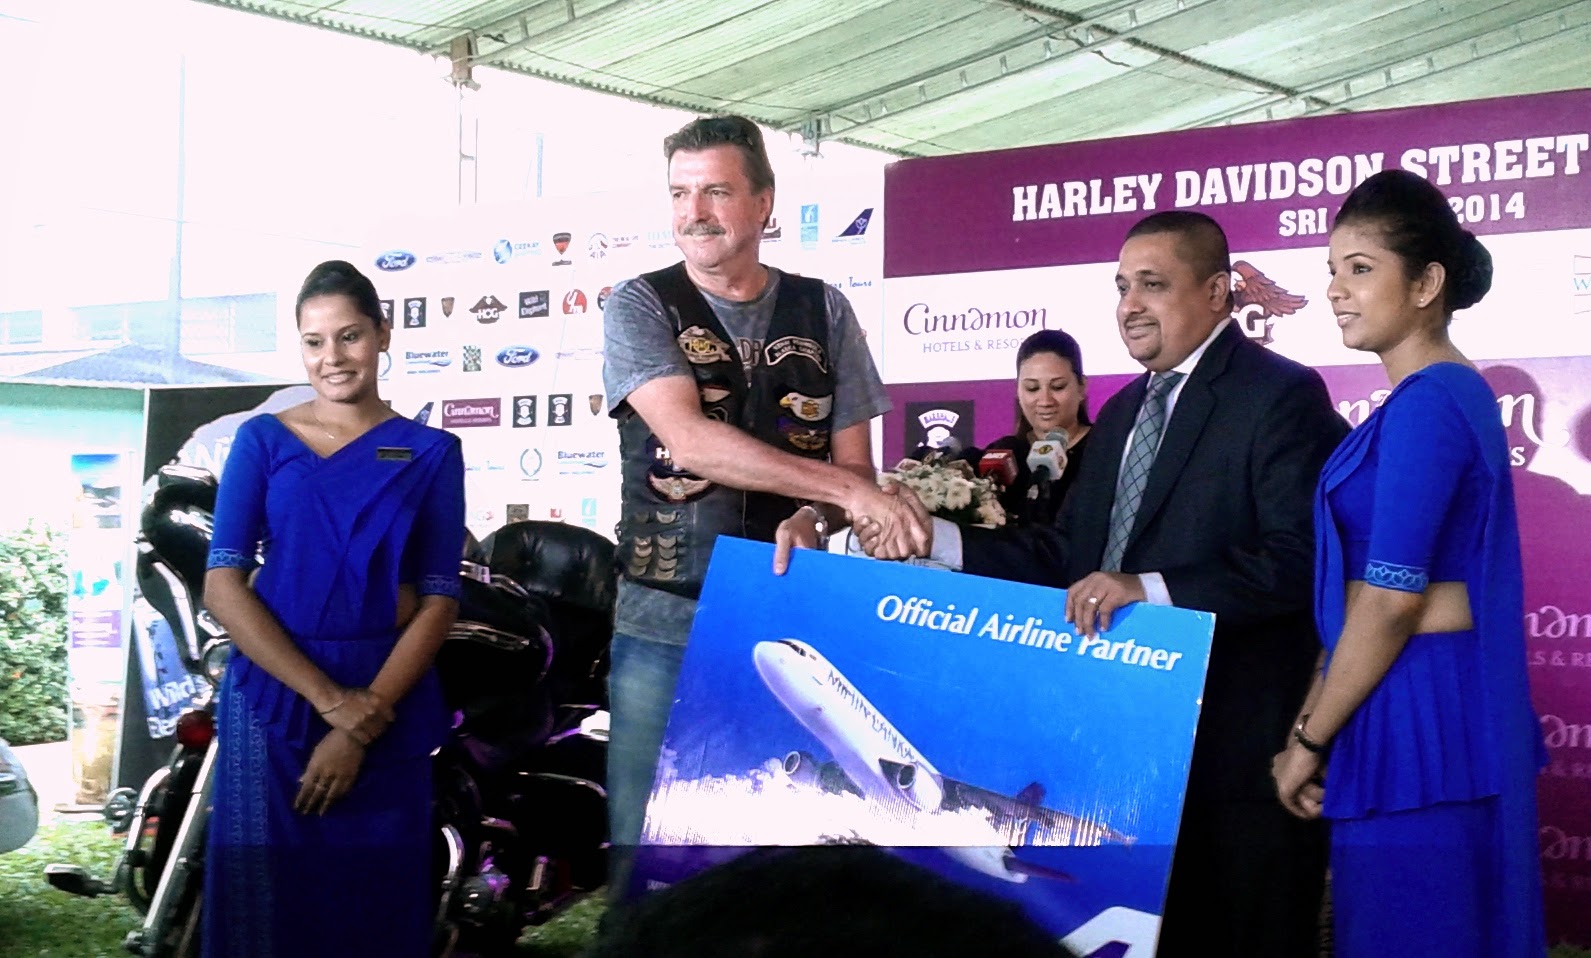 Asanka Fernando, Head of Sales, Mihin Lanka hands over Sponsorship Cheque to a Harley Davidson team member at a press conference